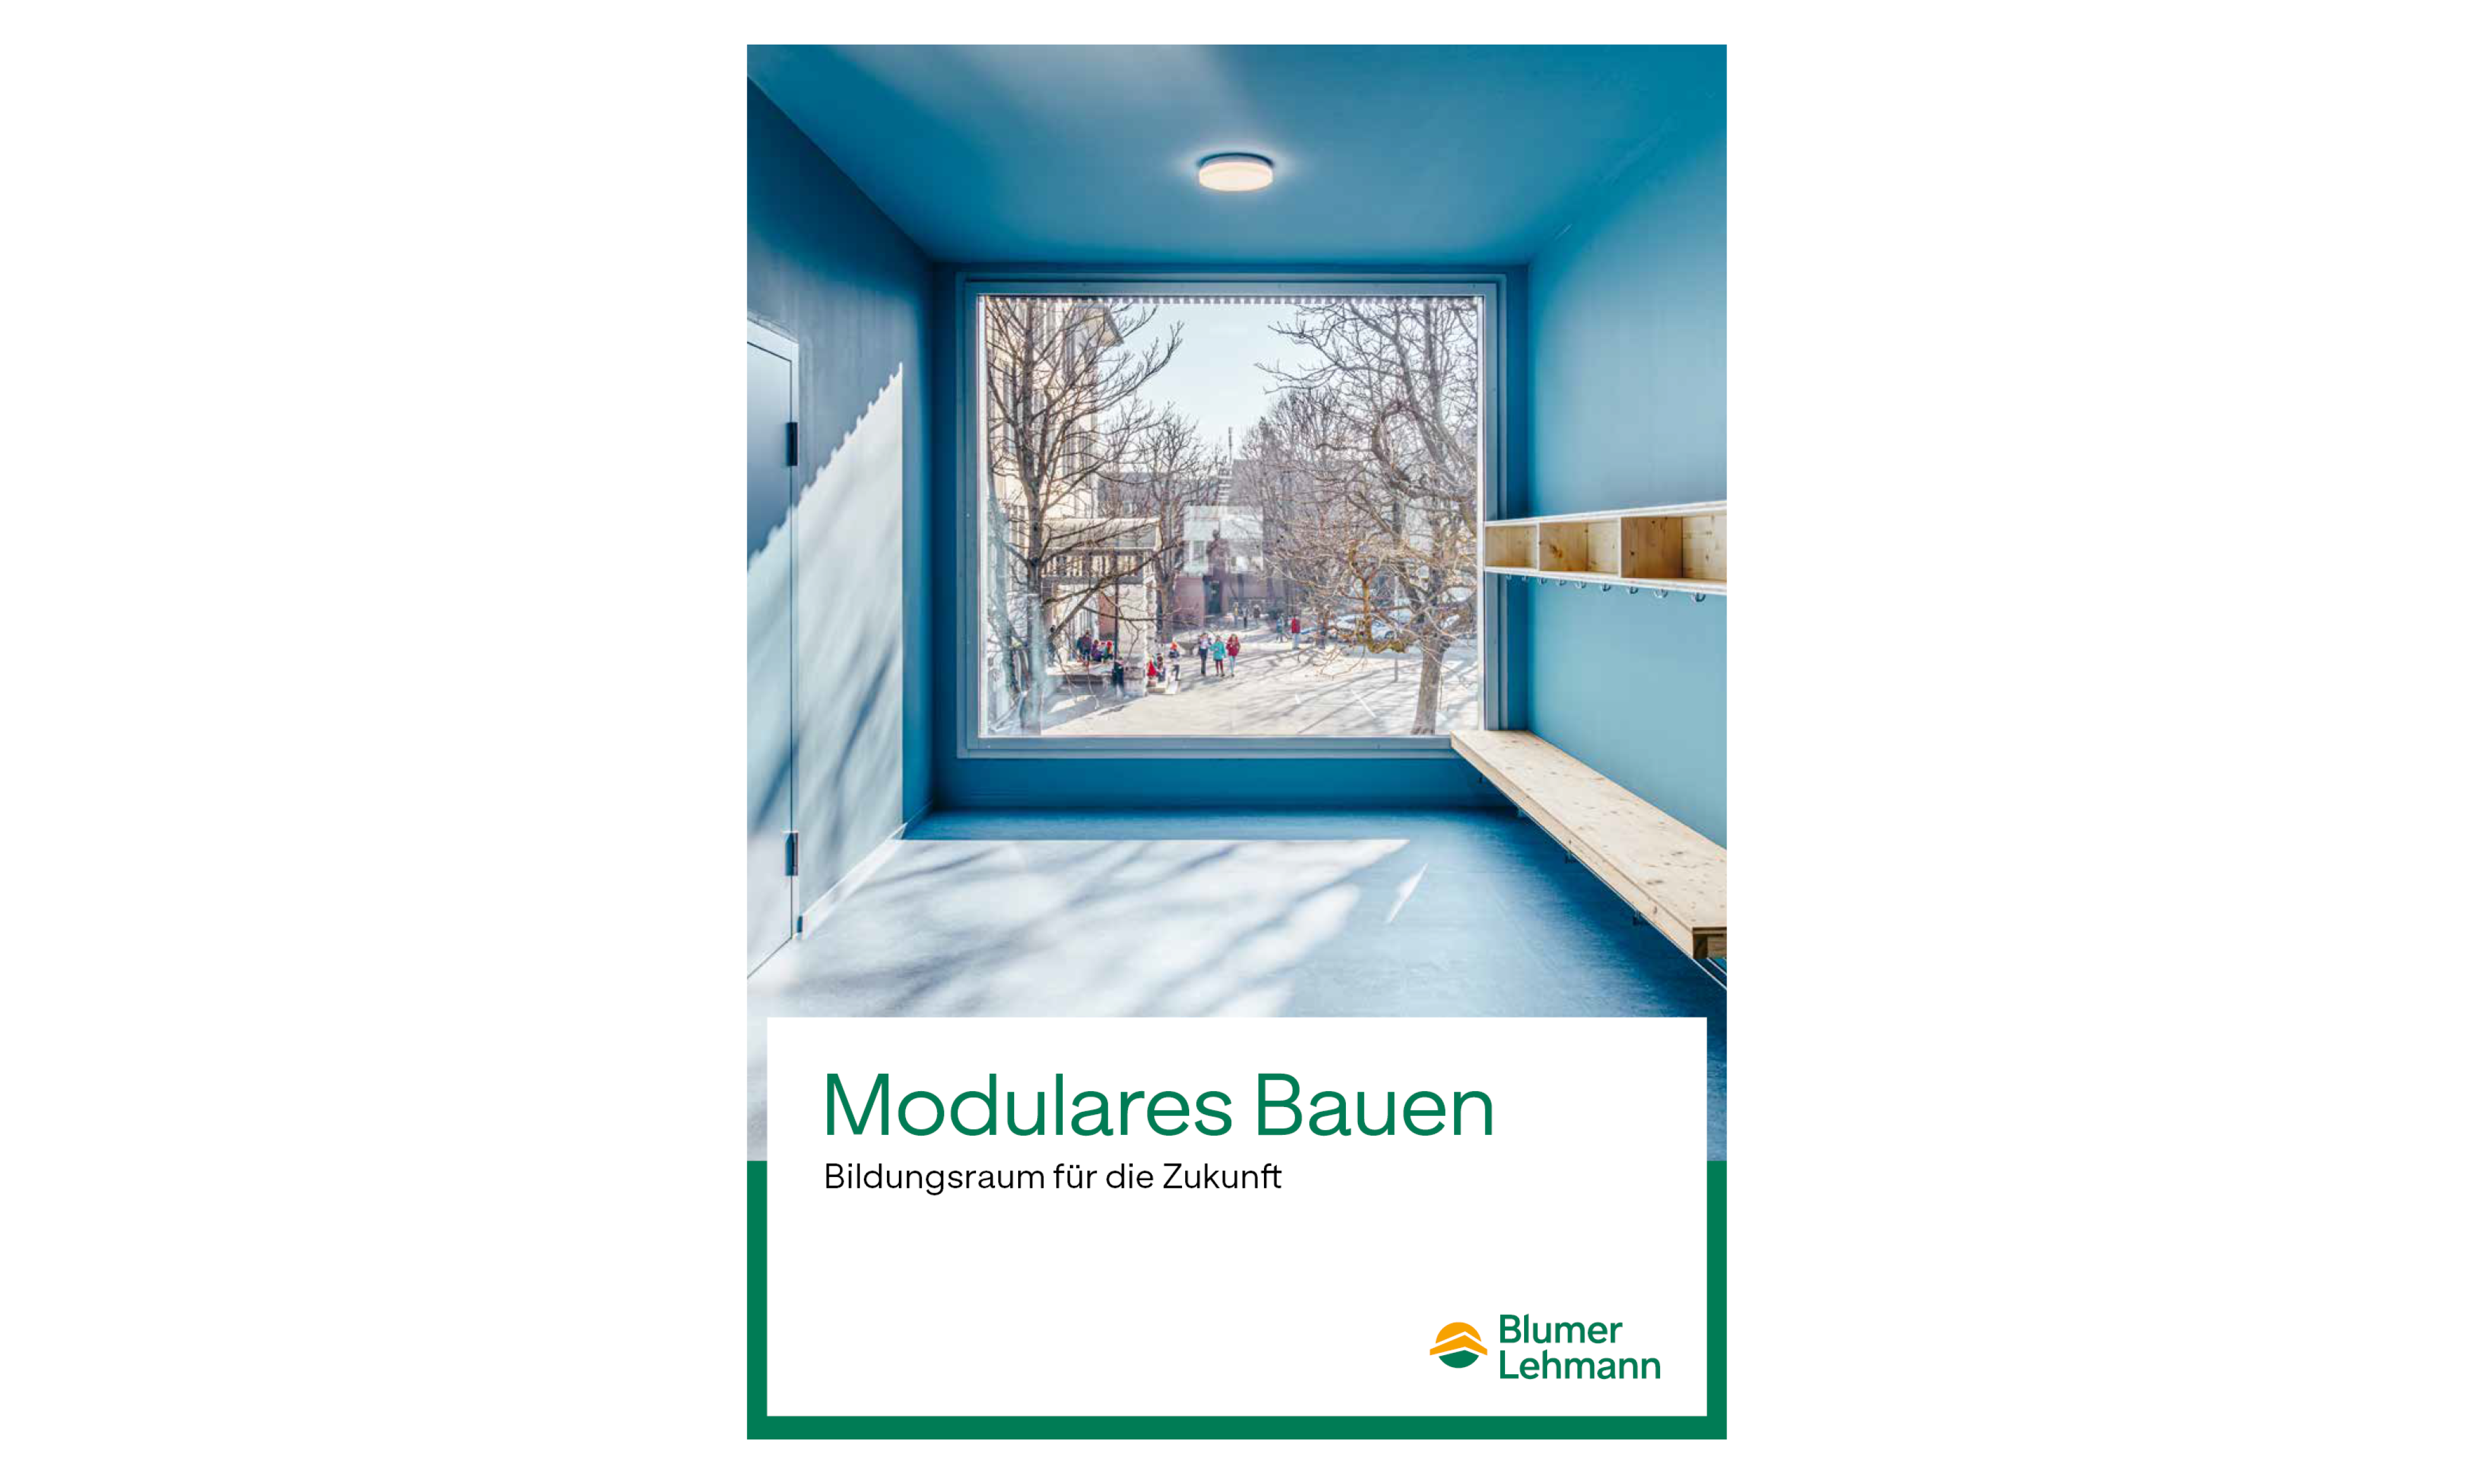 Brochure: Modular construction – Educational space for the future by Blumer Lehmann